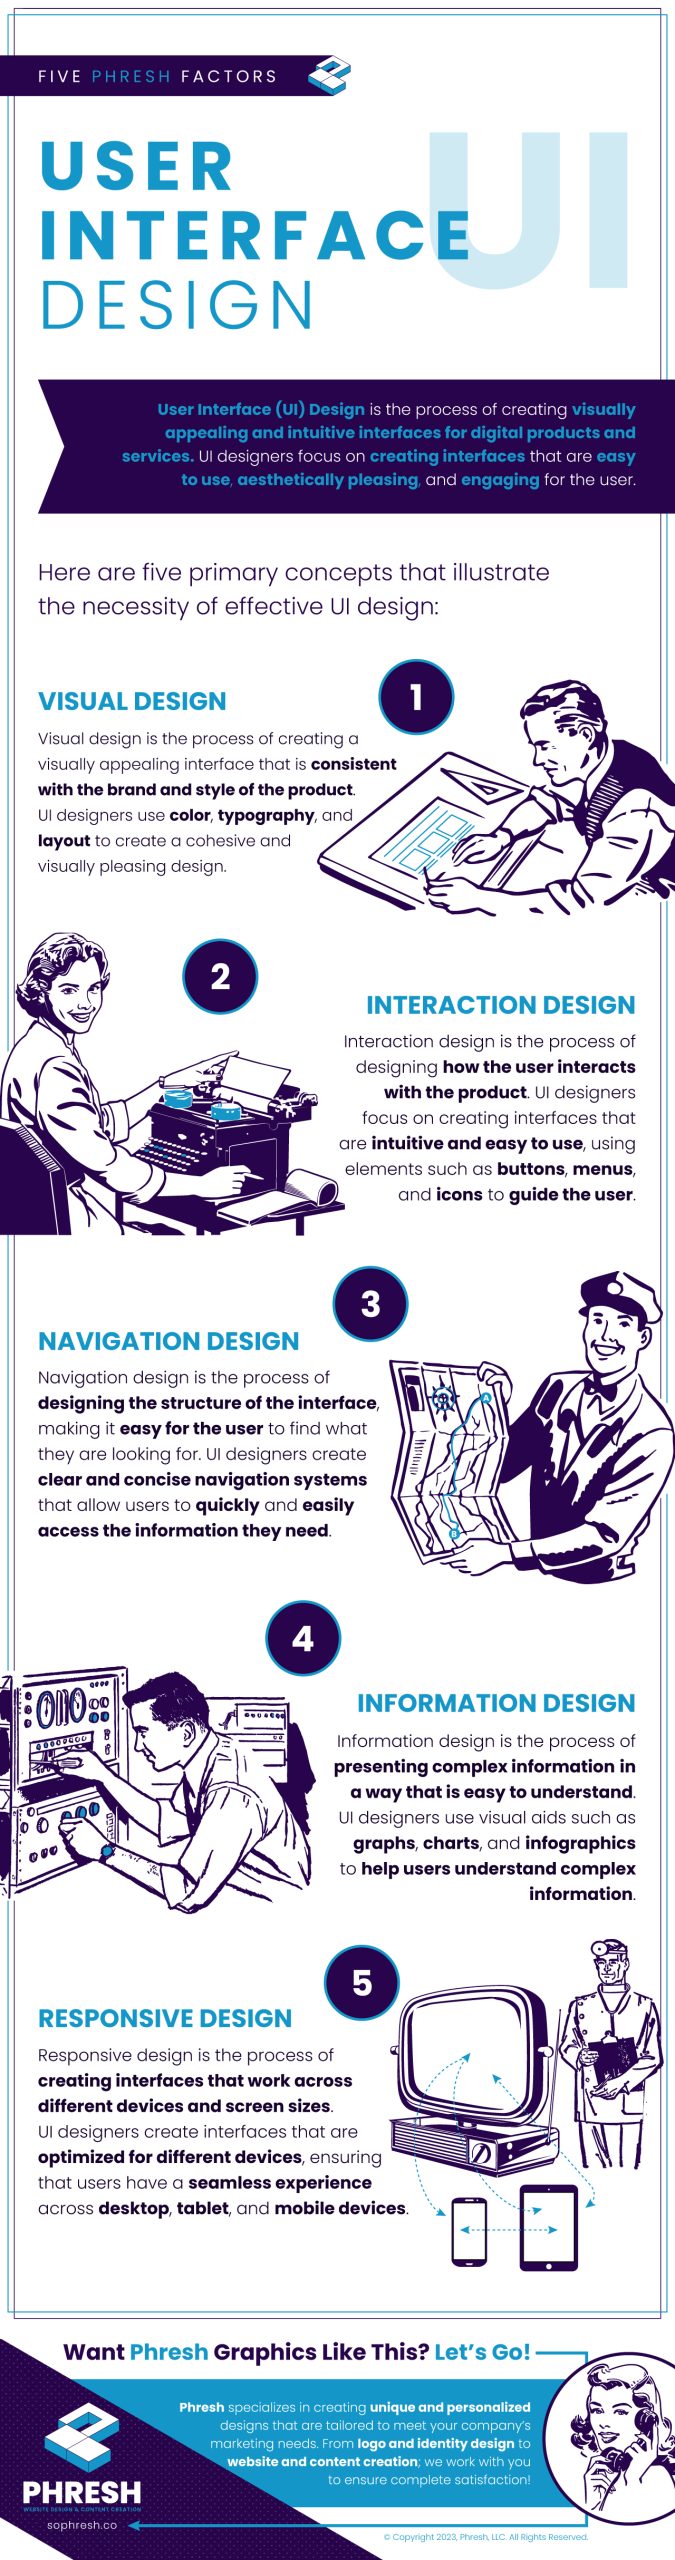 5 User Interface Design Factors